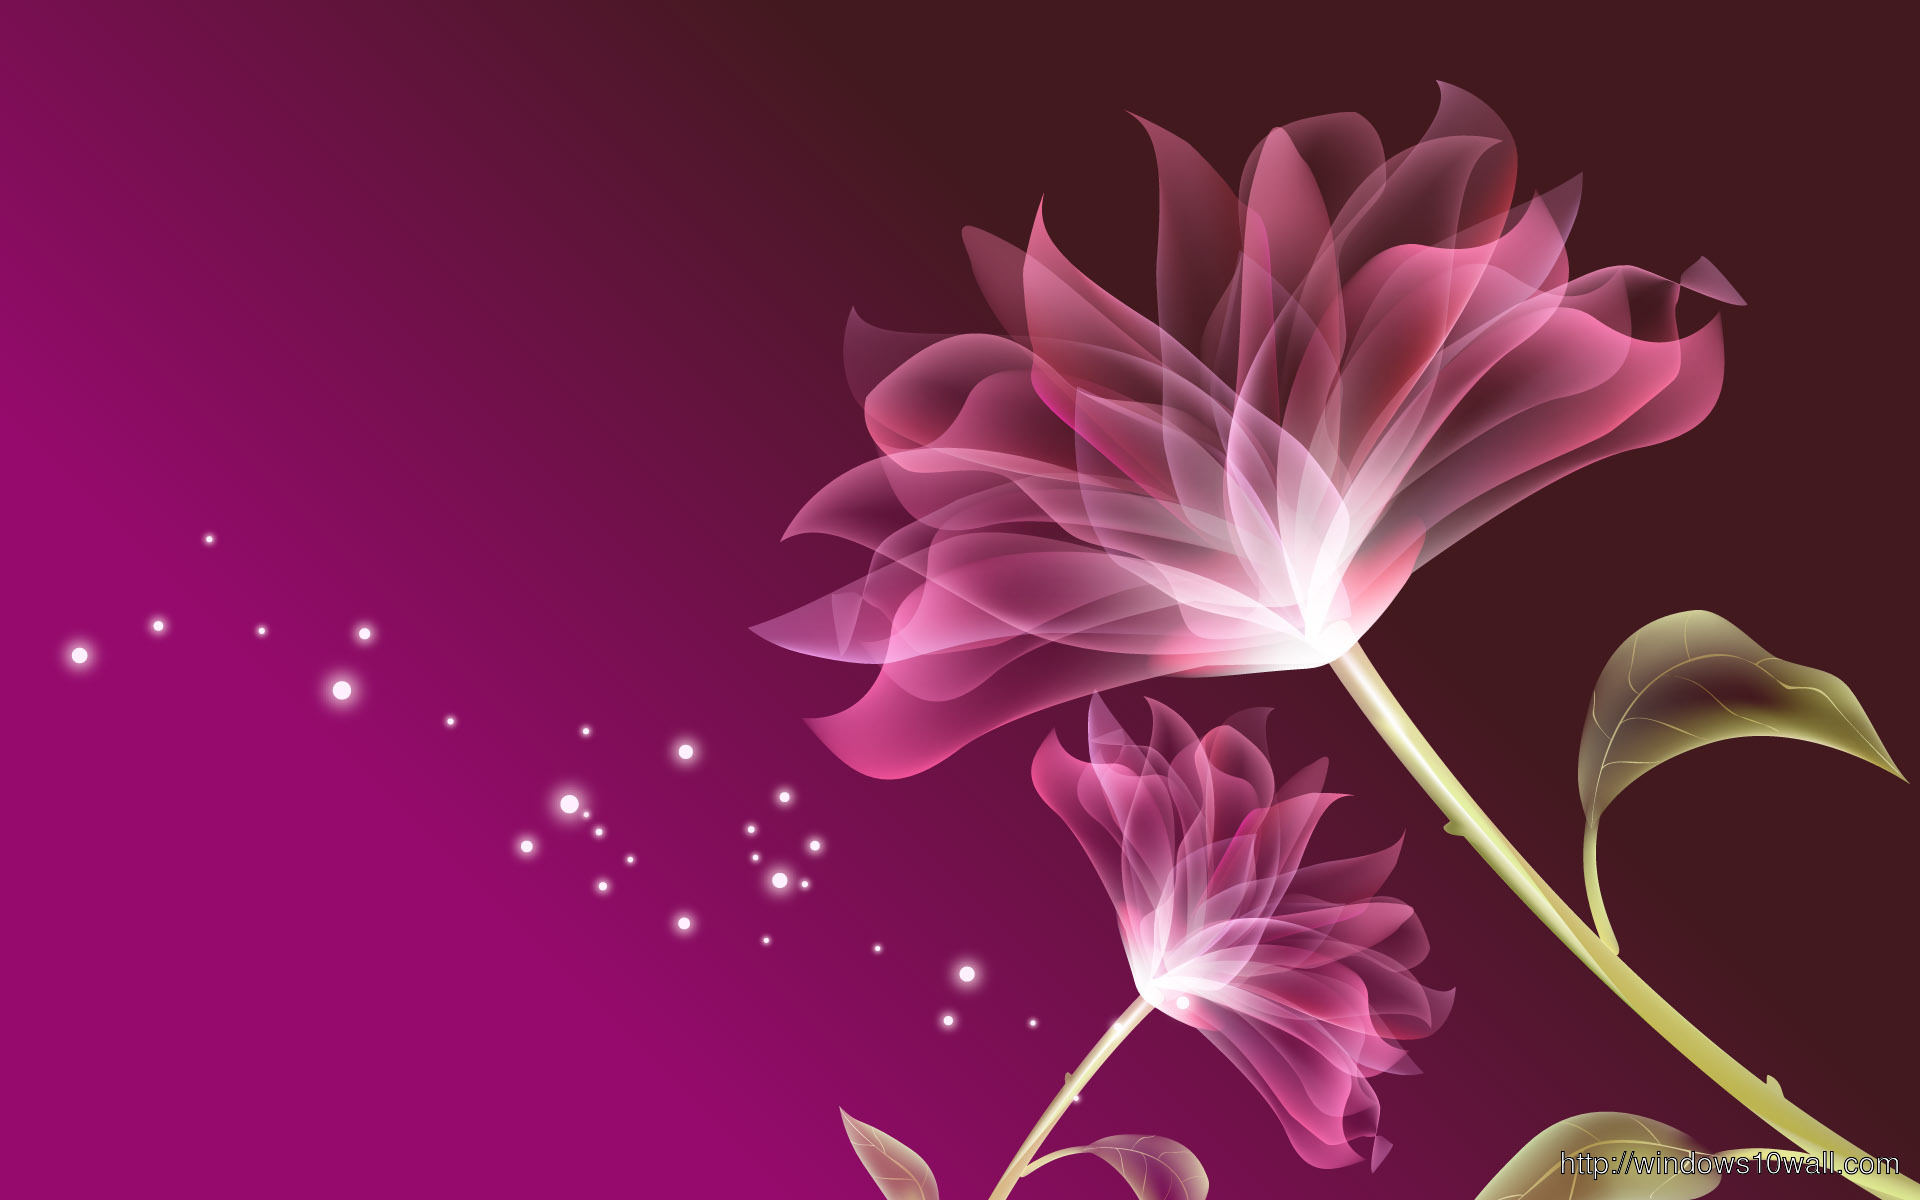 Cg Pink Flower Free Wallpapers 2013 Free Download